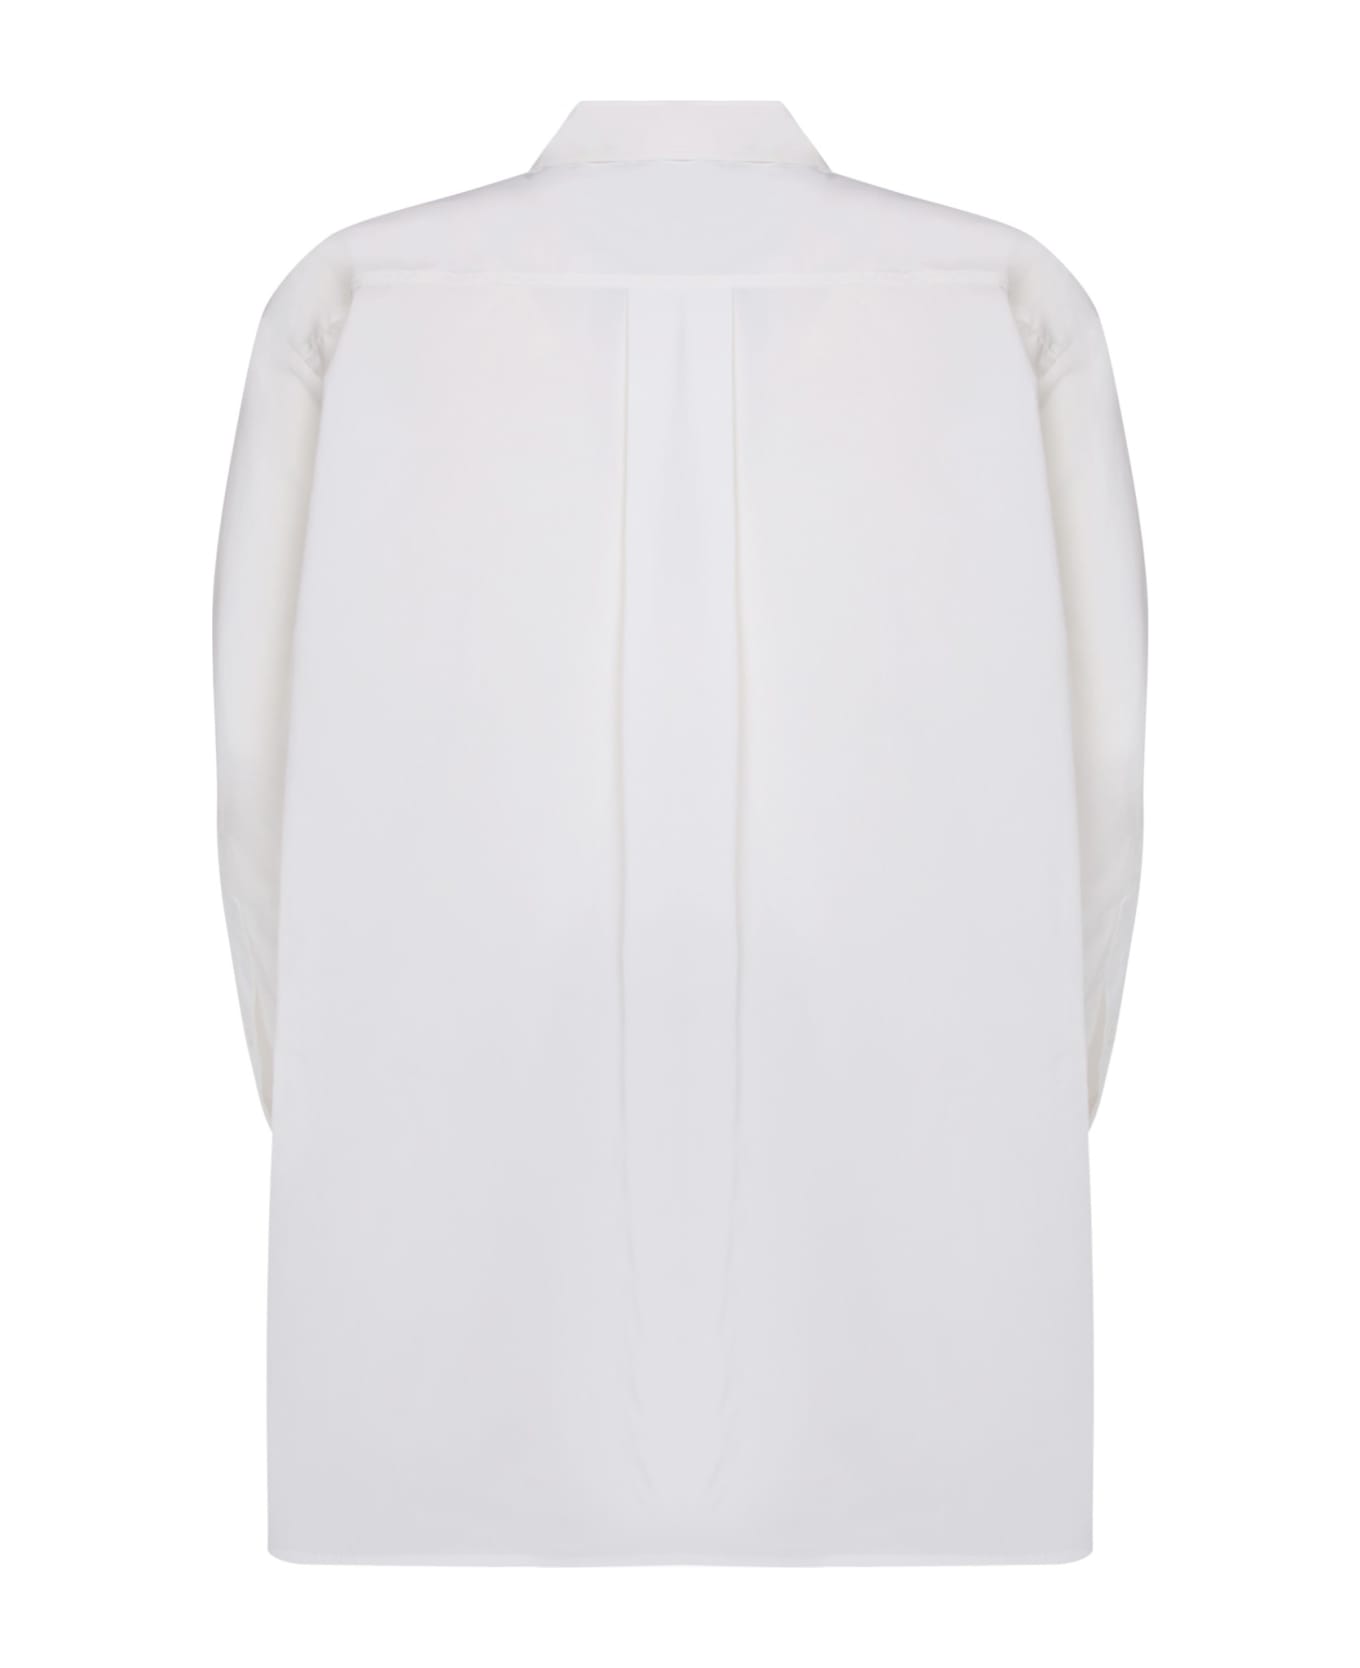 Paul Smith Oversize White Shirt - White シャツ